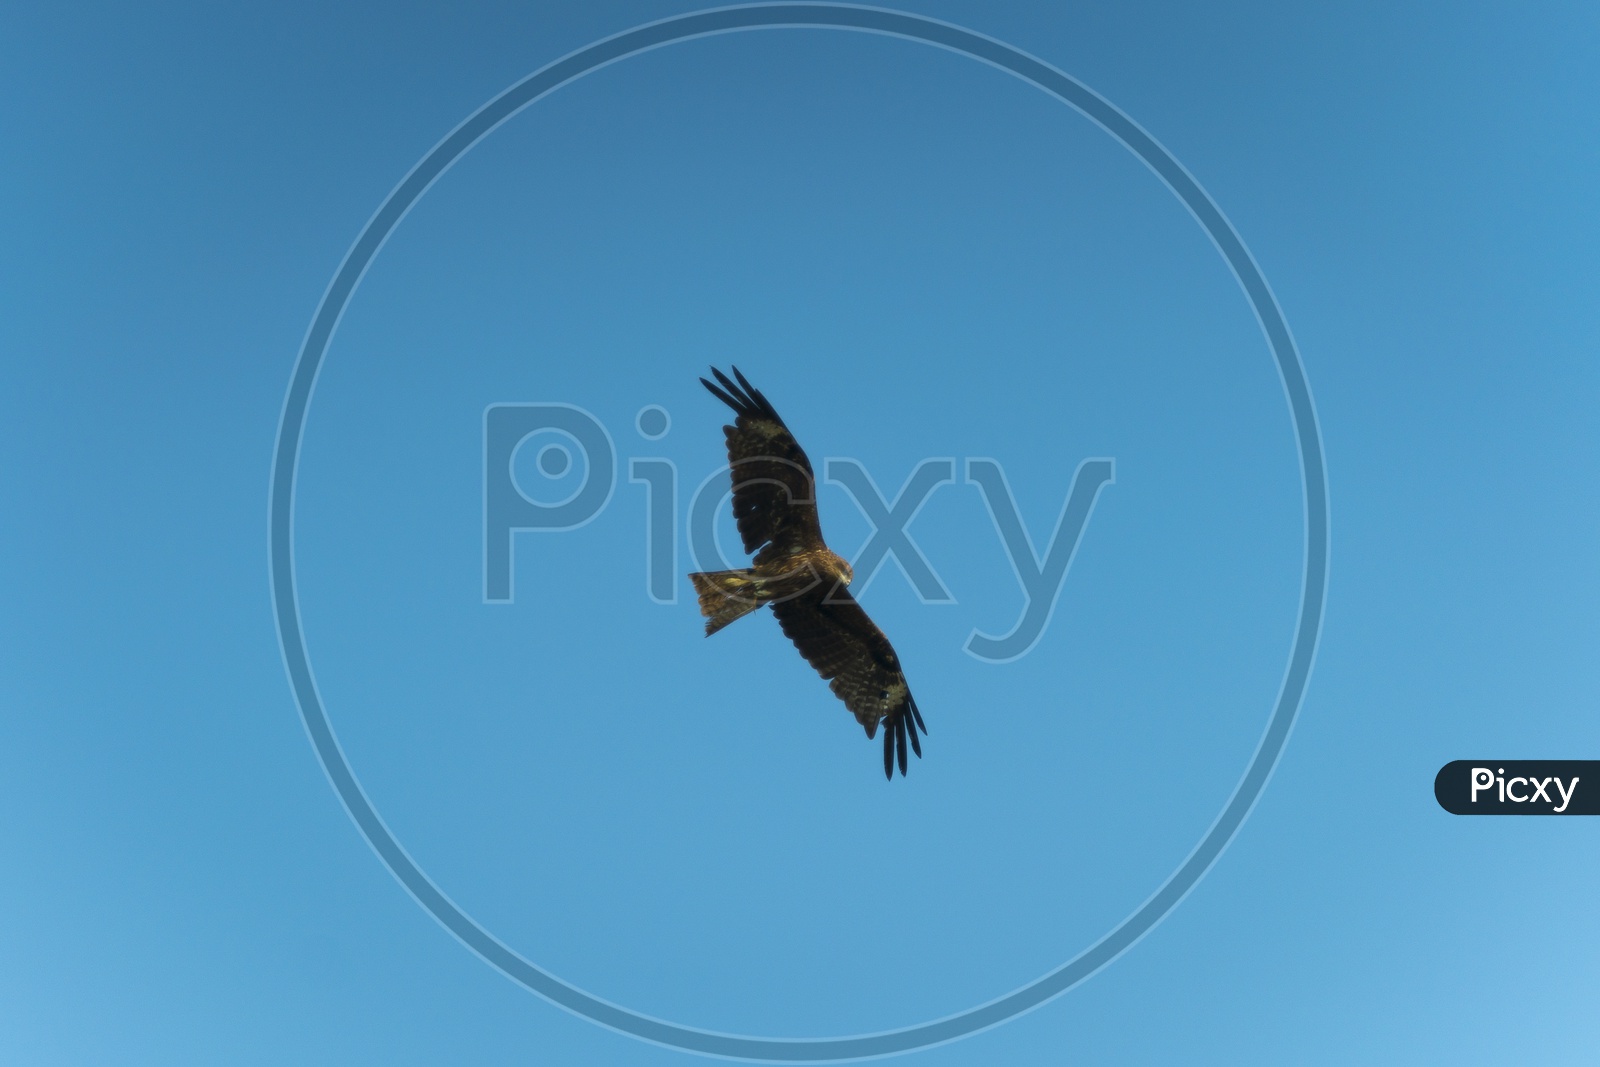 hawk or Eagle Flying over a Blue Sky Background